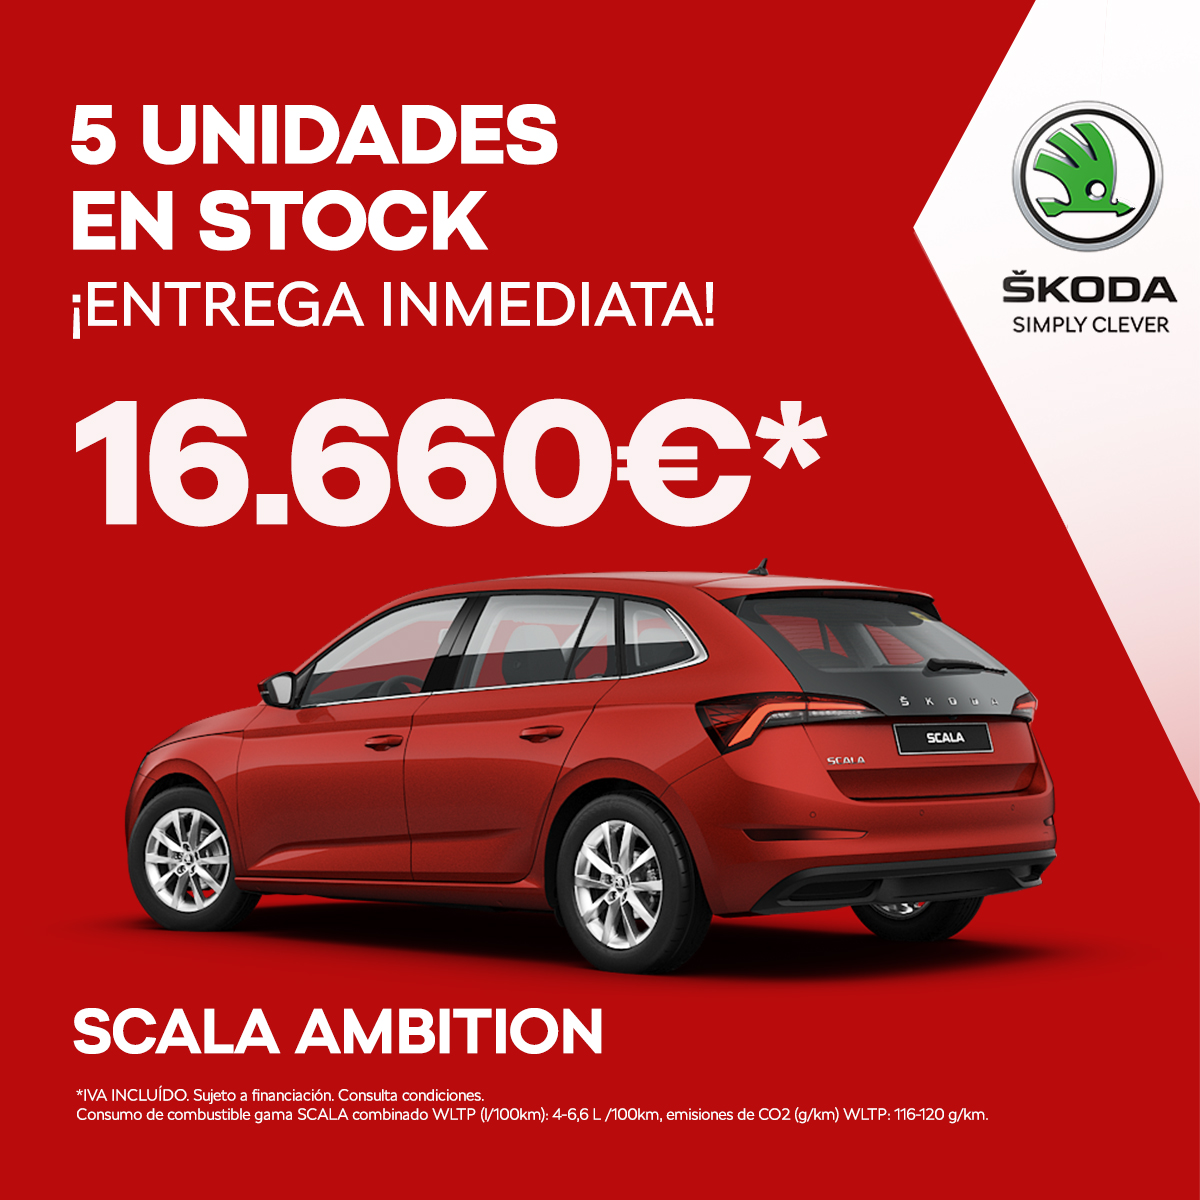 Škoda Scala Ambition por solo 16.660€*.